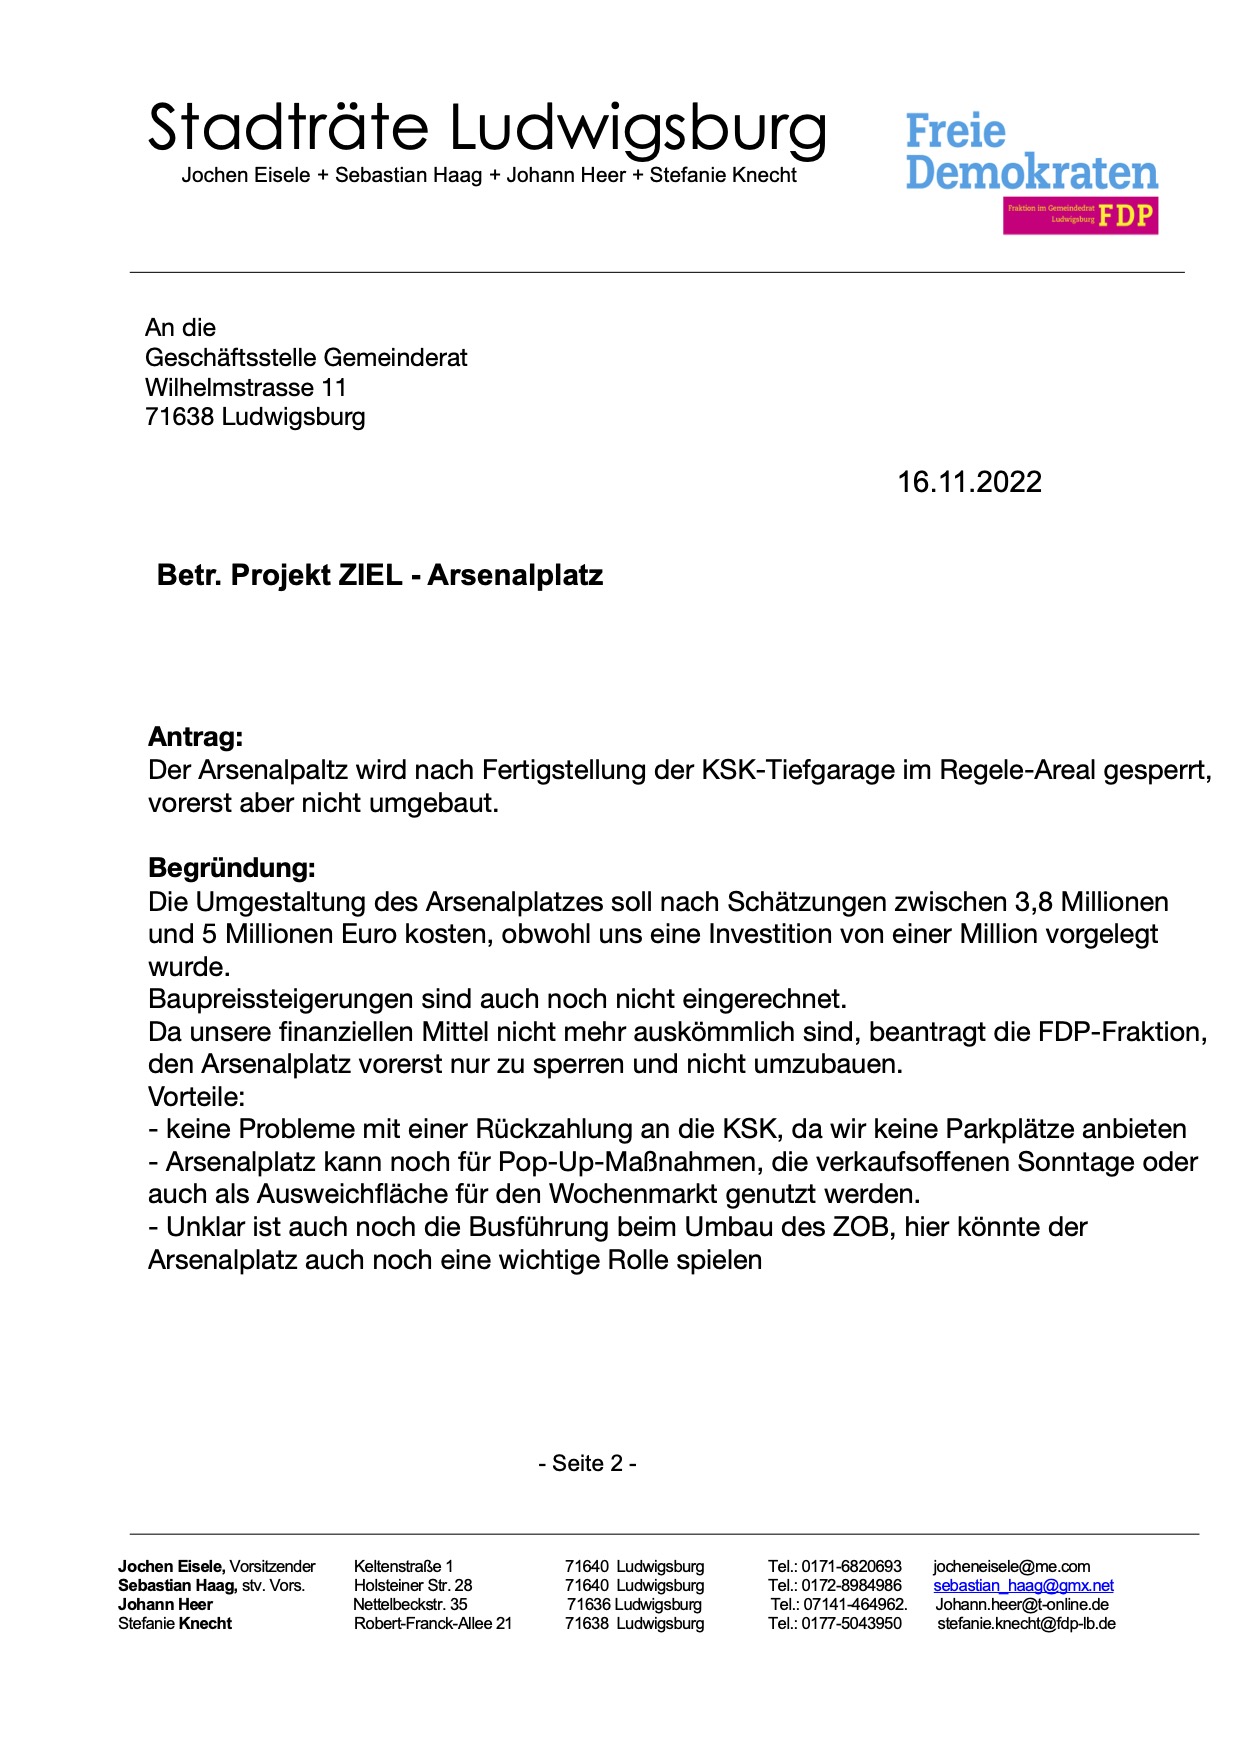 FDP-Antrag: Projekt ZIEL - Arsenalplatz